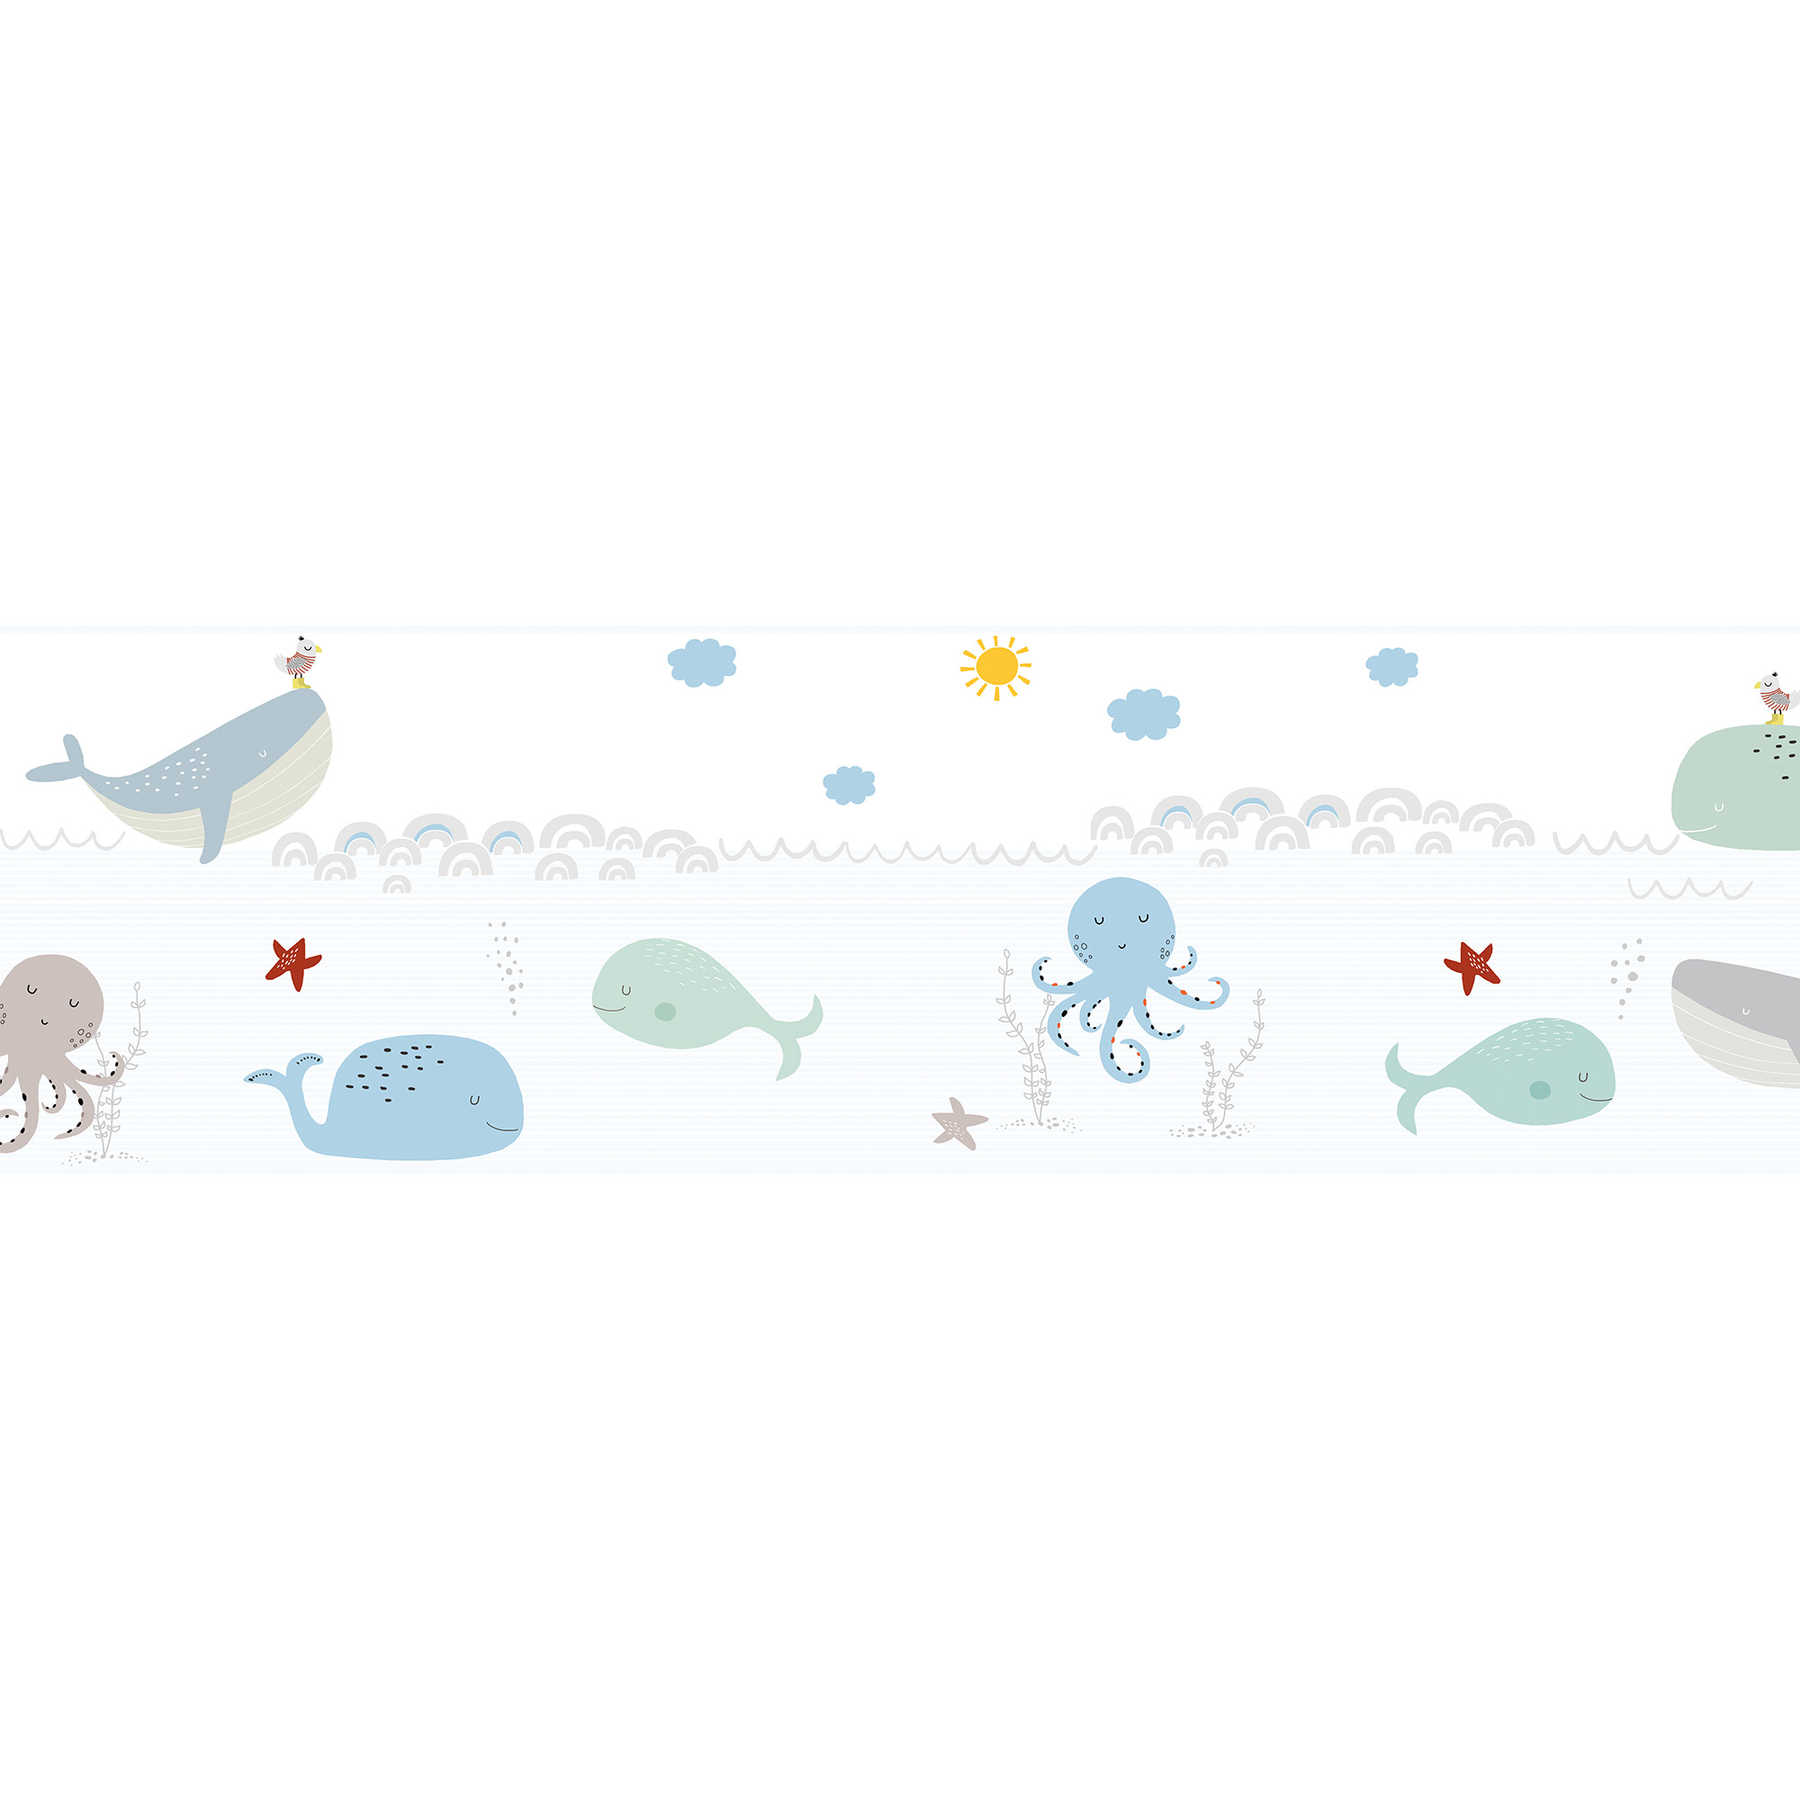         Nursery border "Loving sea creatures" for babies - green, blue, white
    